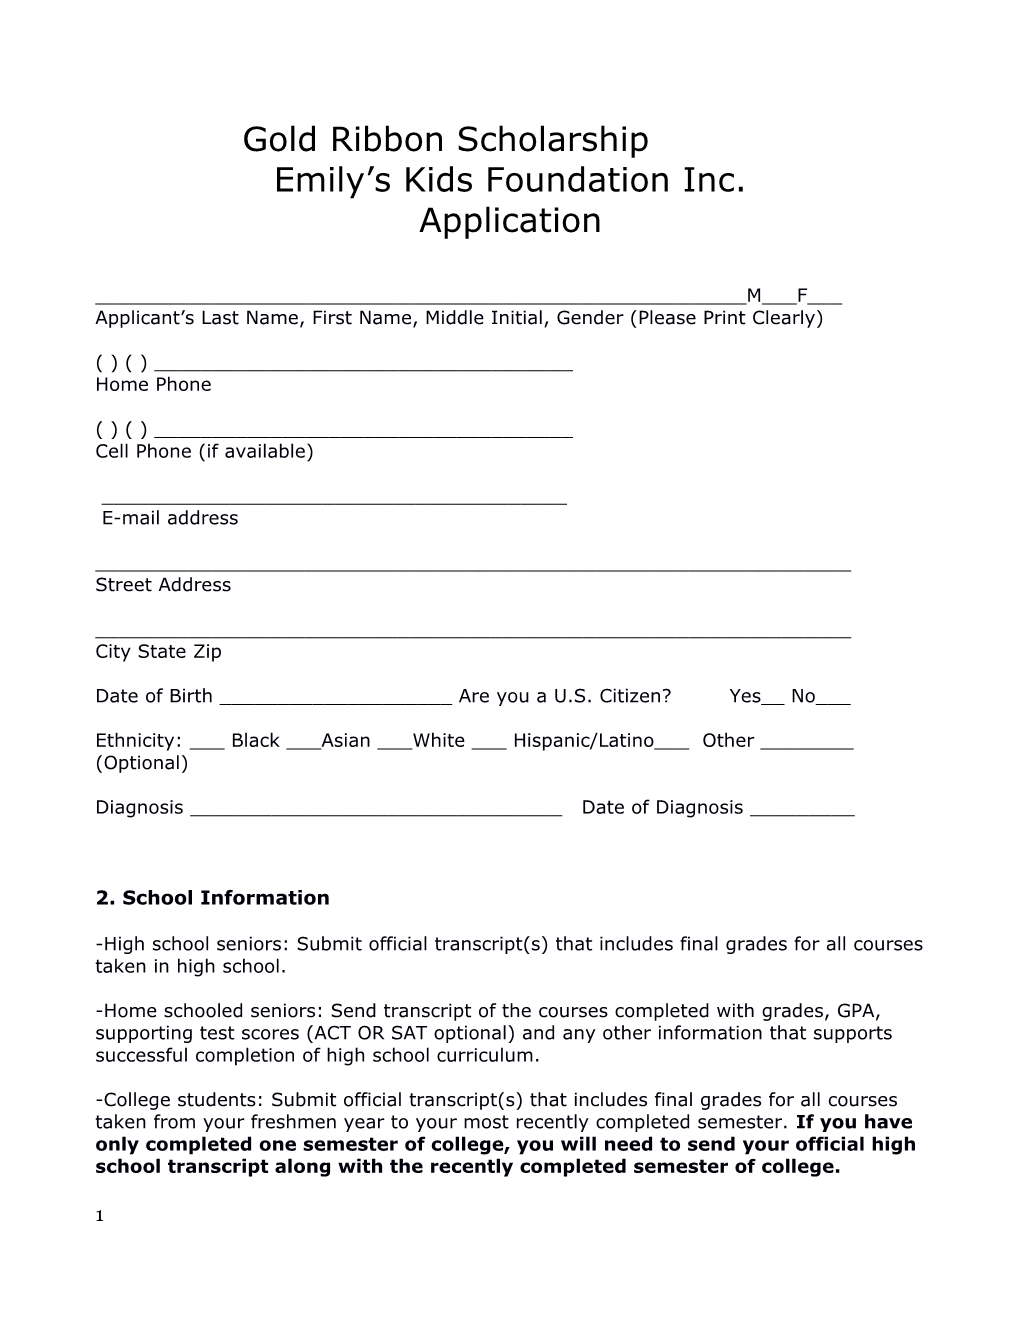 Emily S Kids Foundation Inc